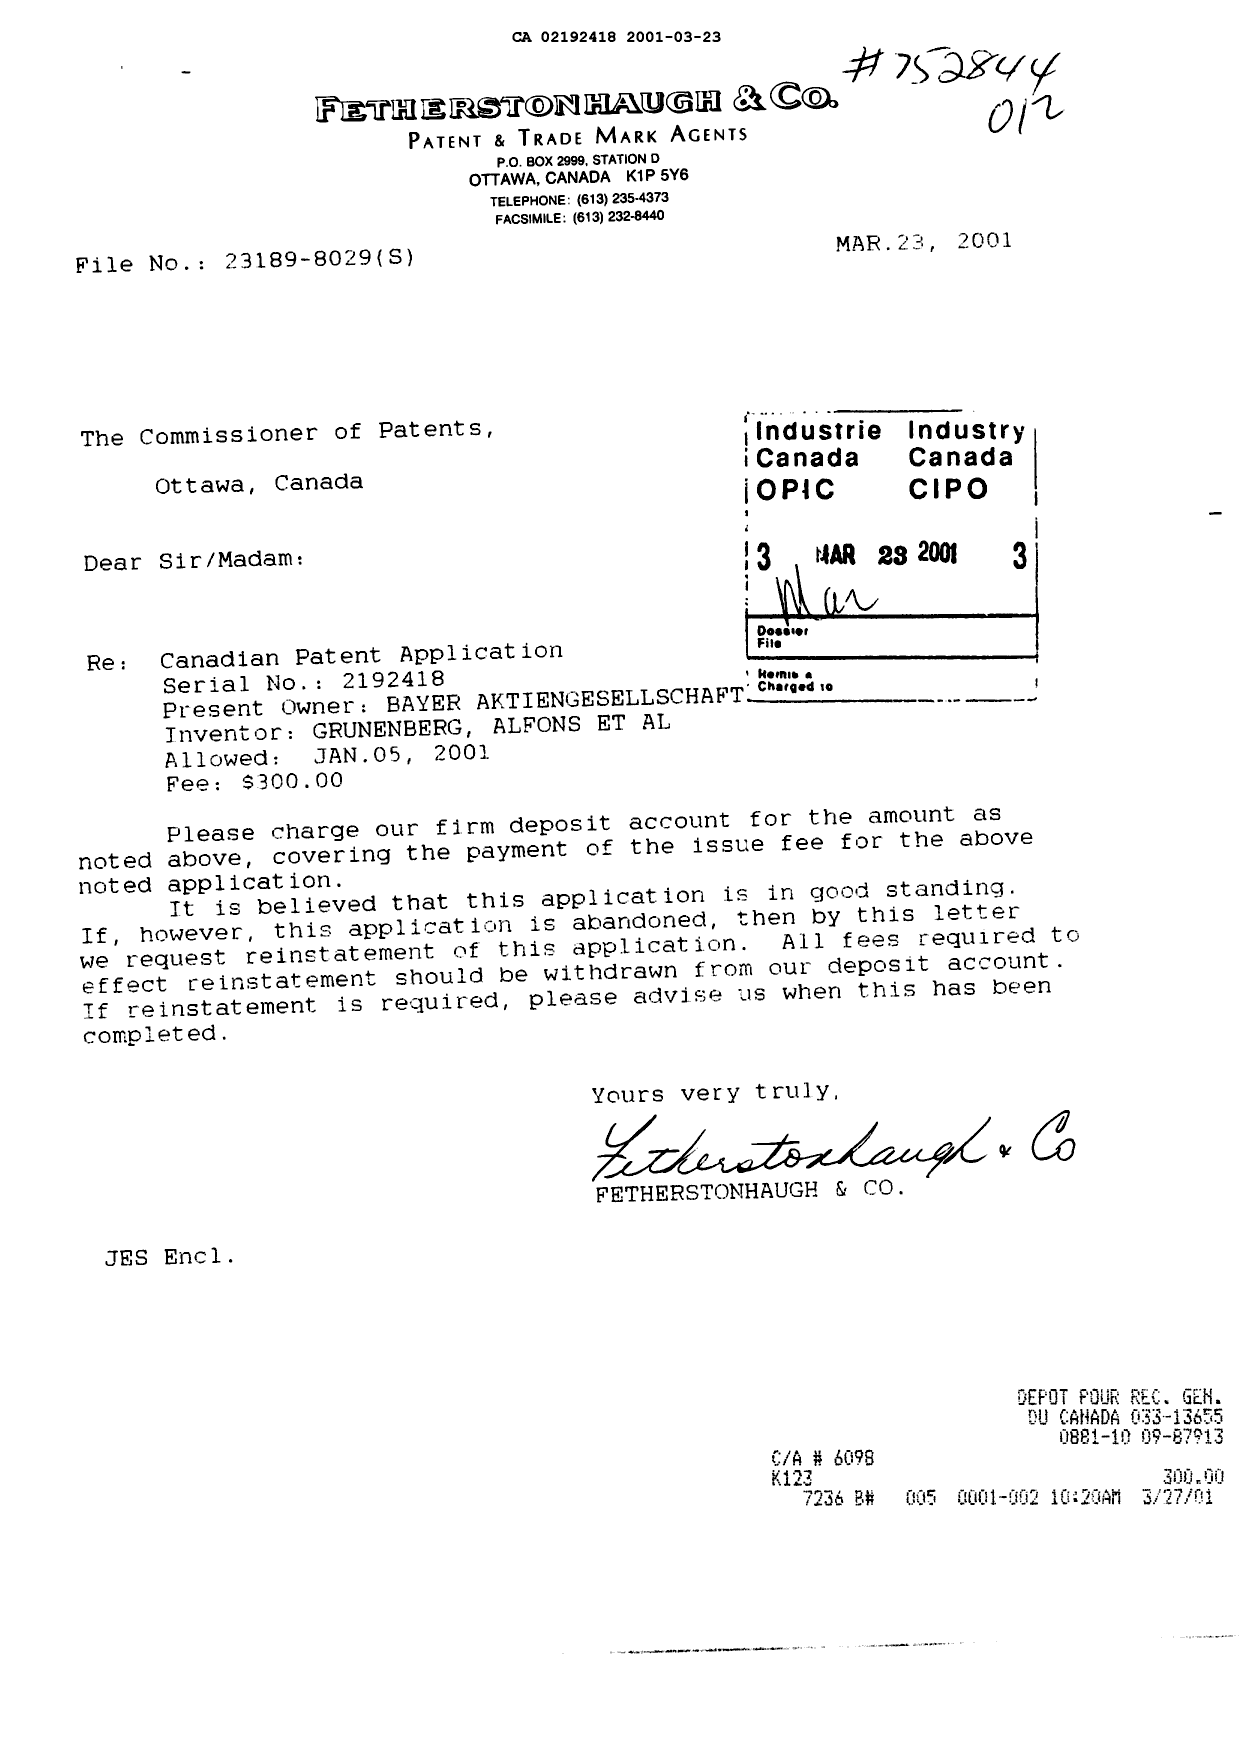 Canadian Patent Document 2192418. Correspondence 20010323. Image 1 of 1